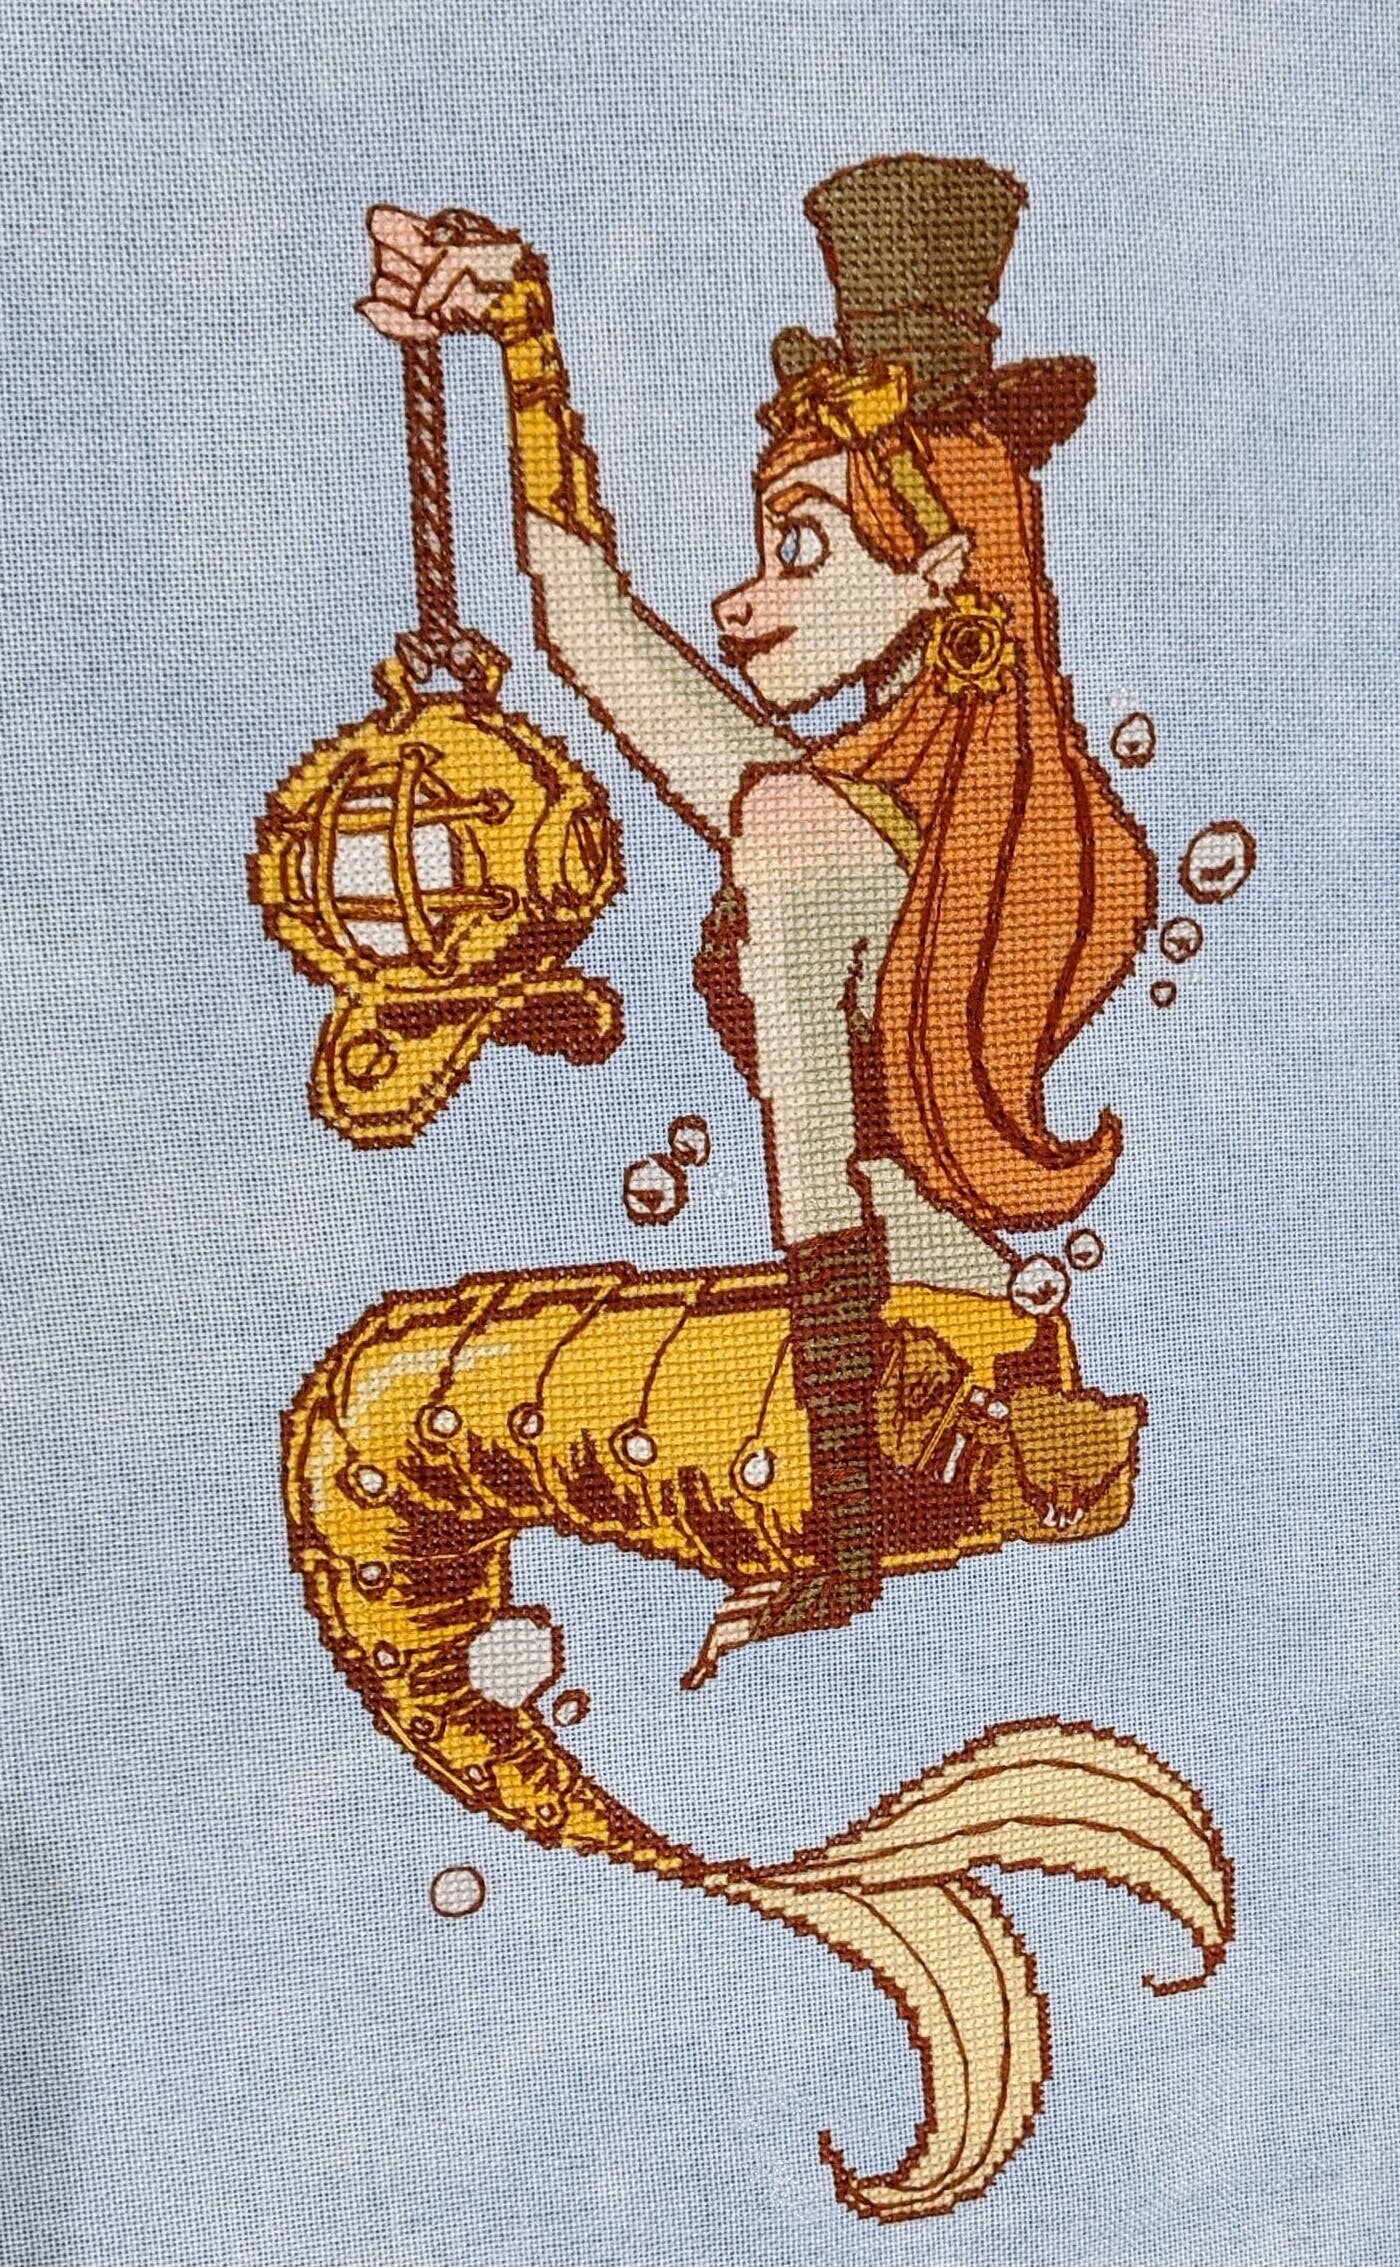 Brian Kesinger's steampunk mermaid cross stitch pattern